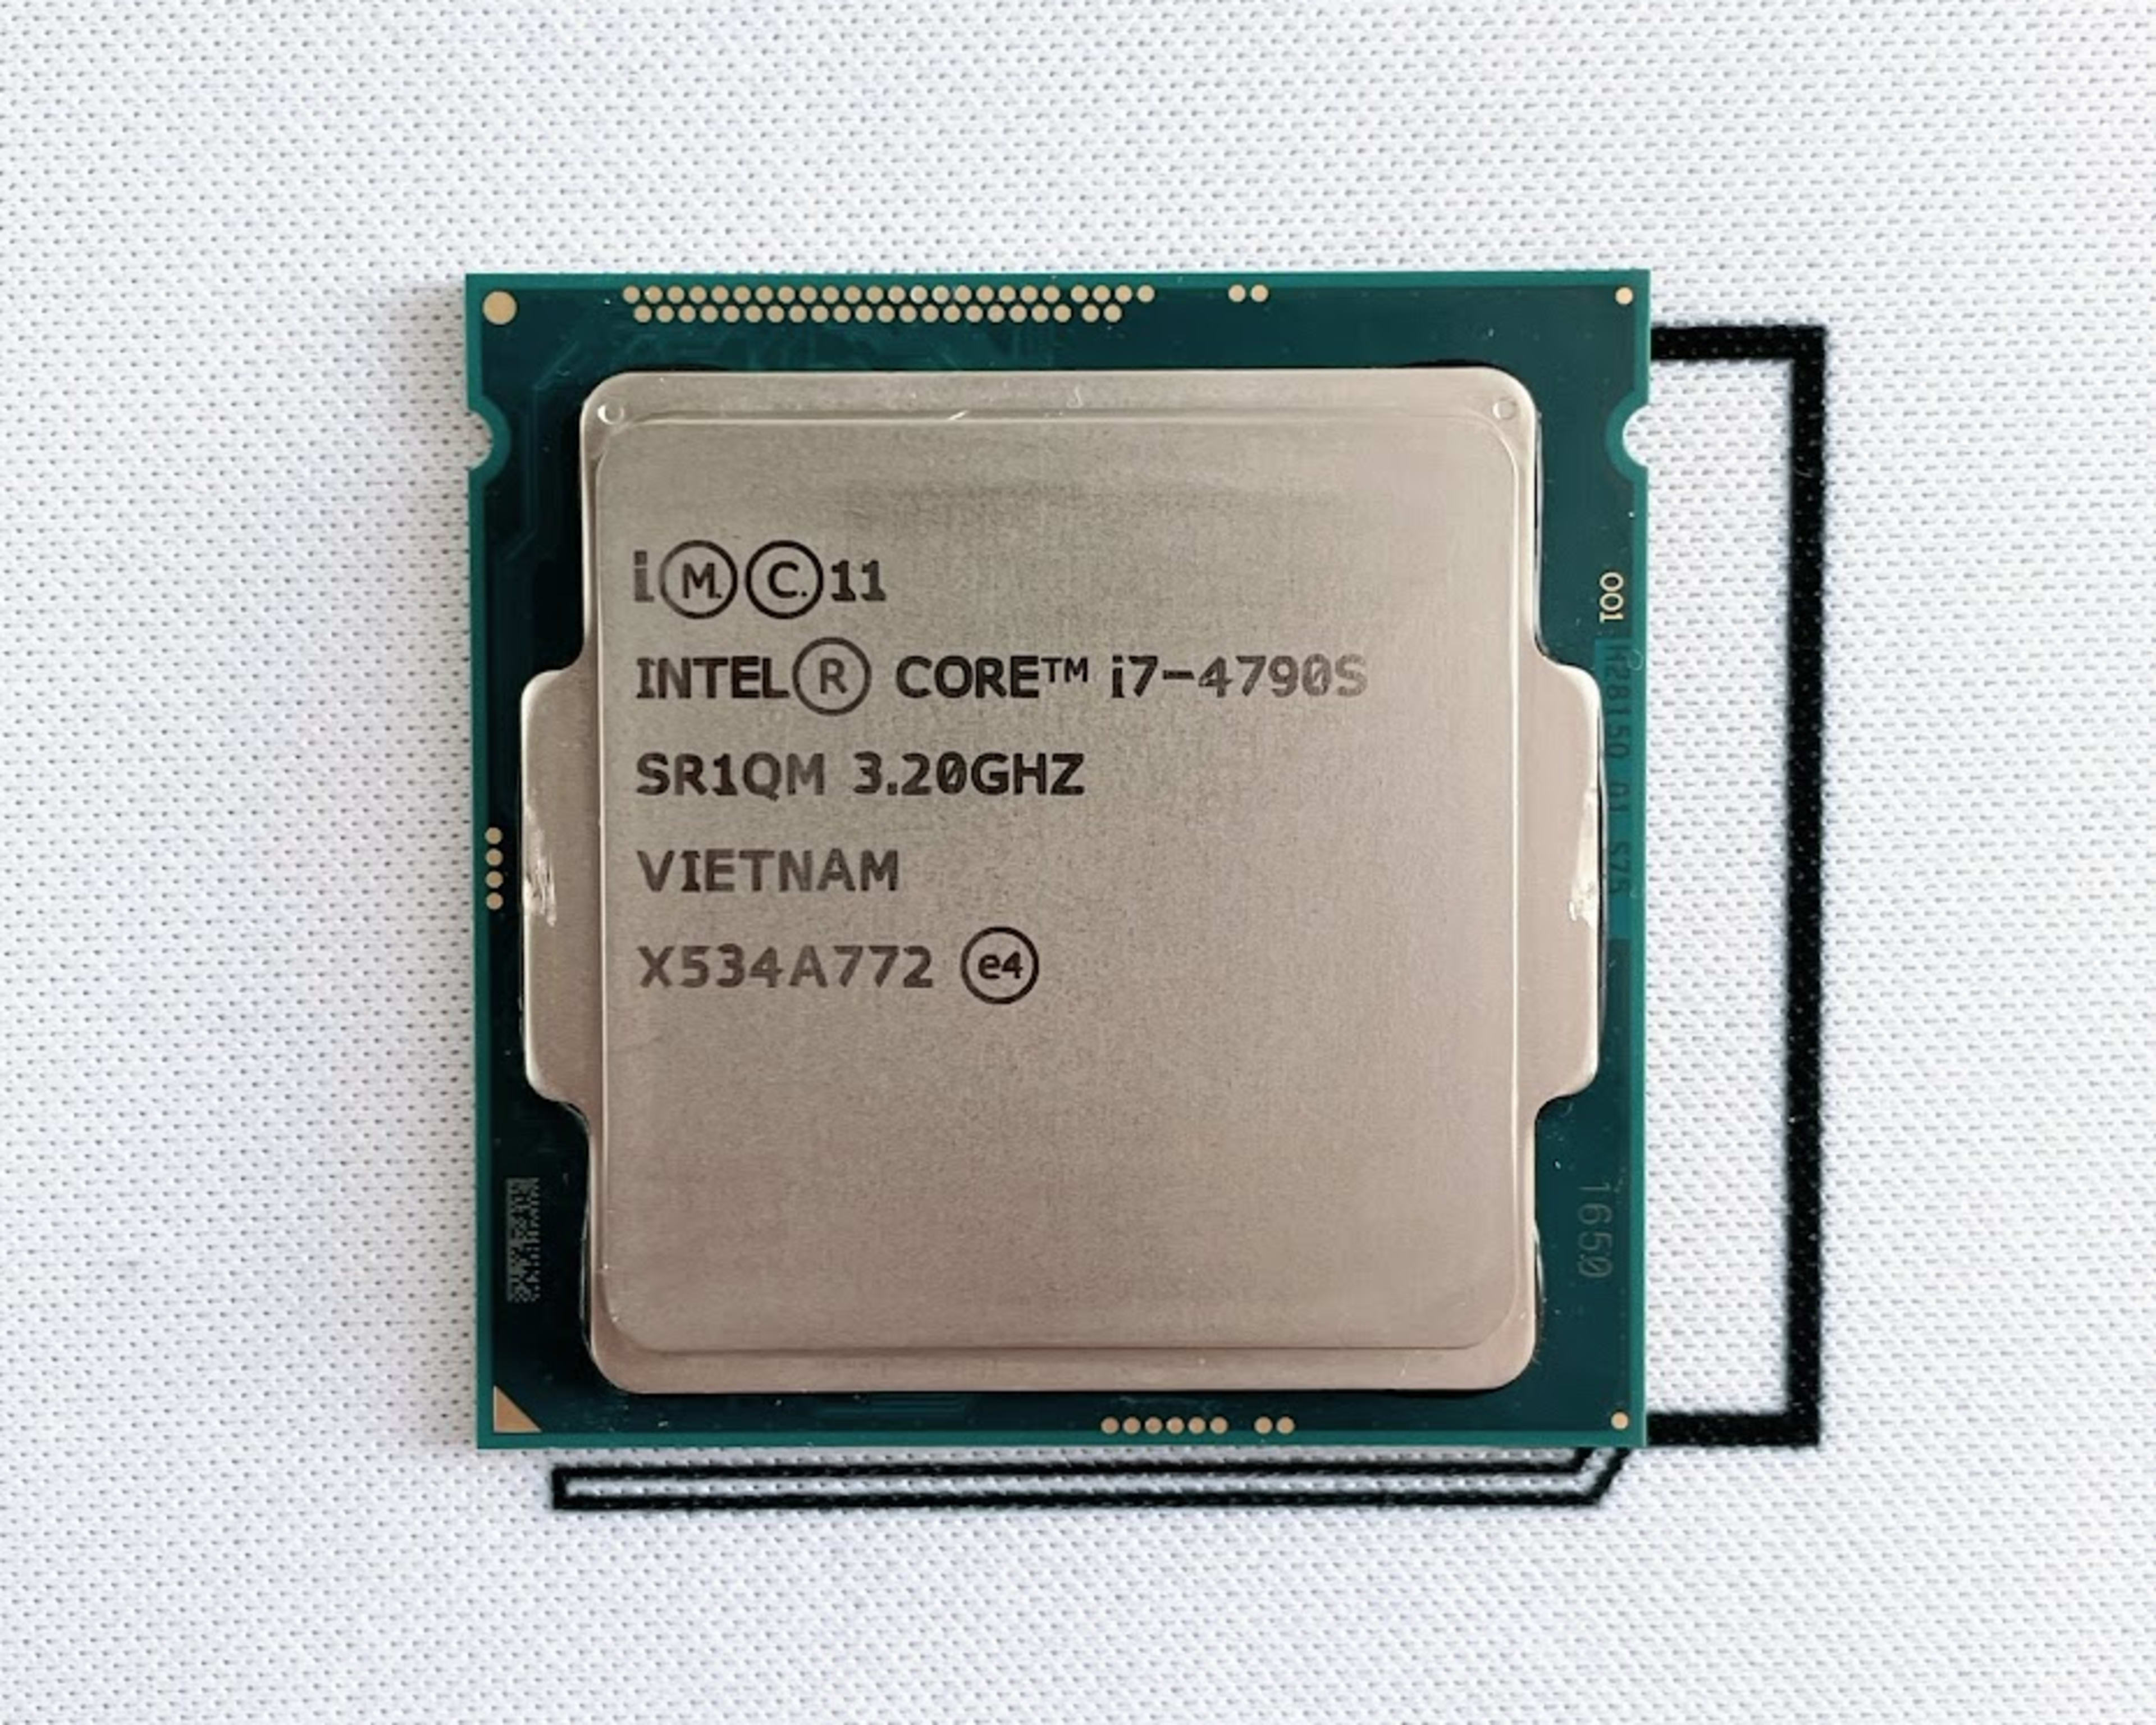 Intel i7-4790s 3.20GHz Quad-Core 8MB LGA1150 CPU Processor SR1QM 65W